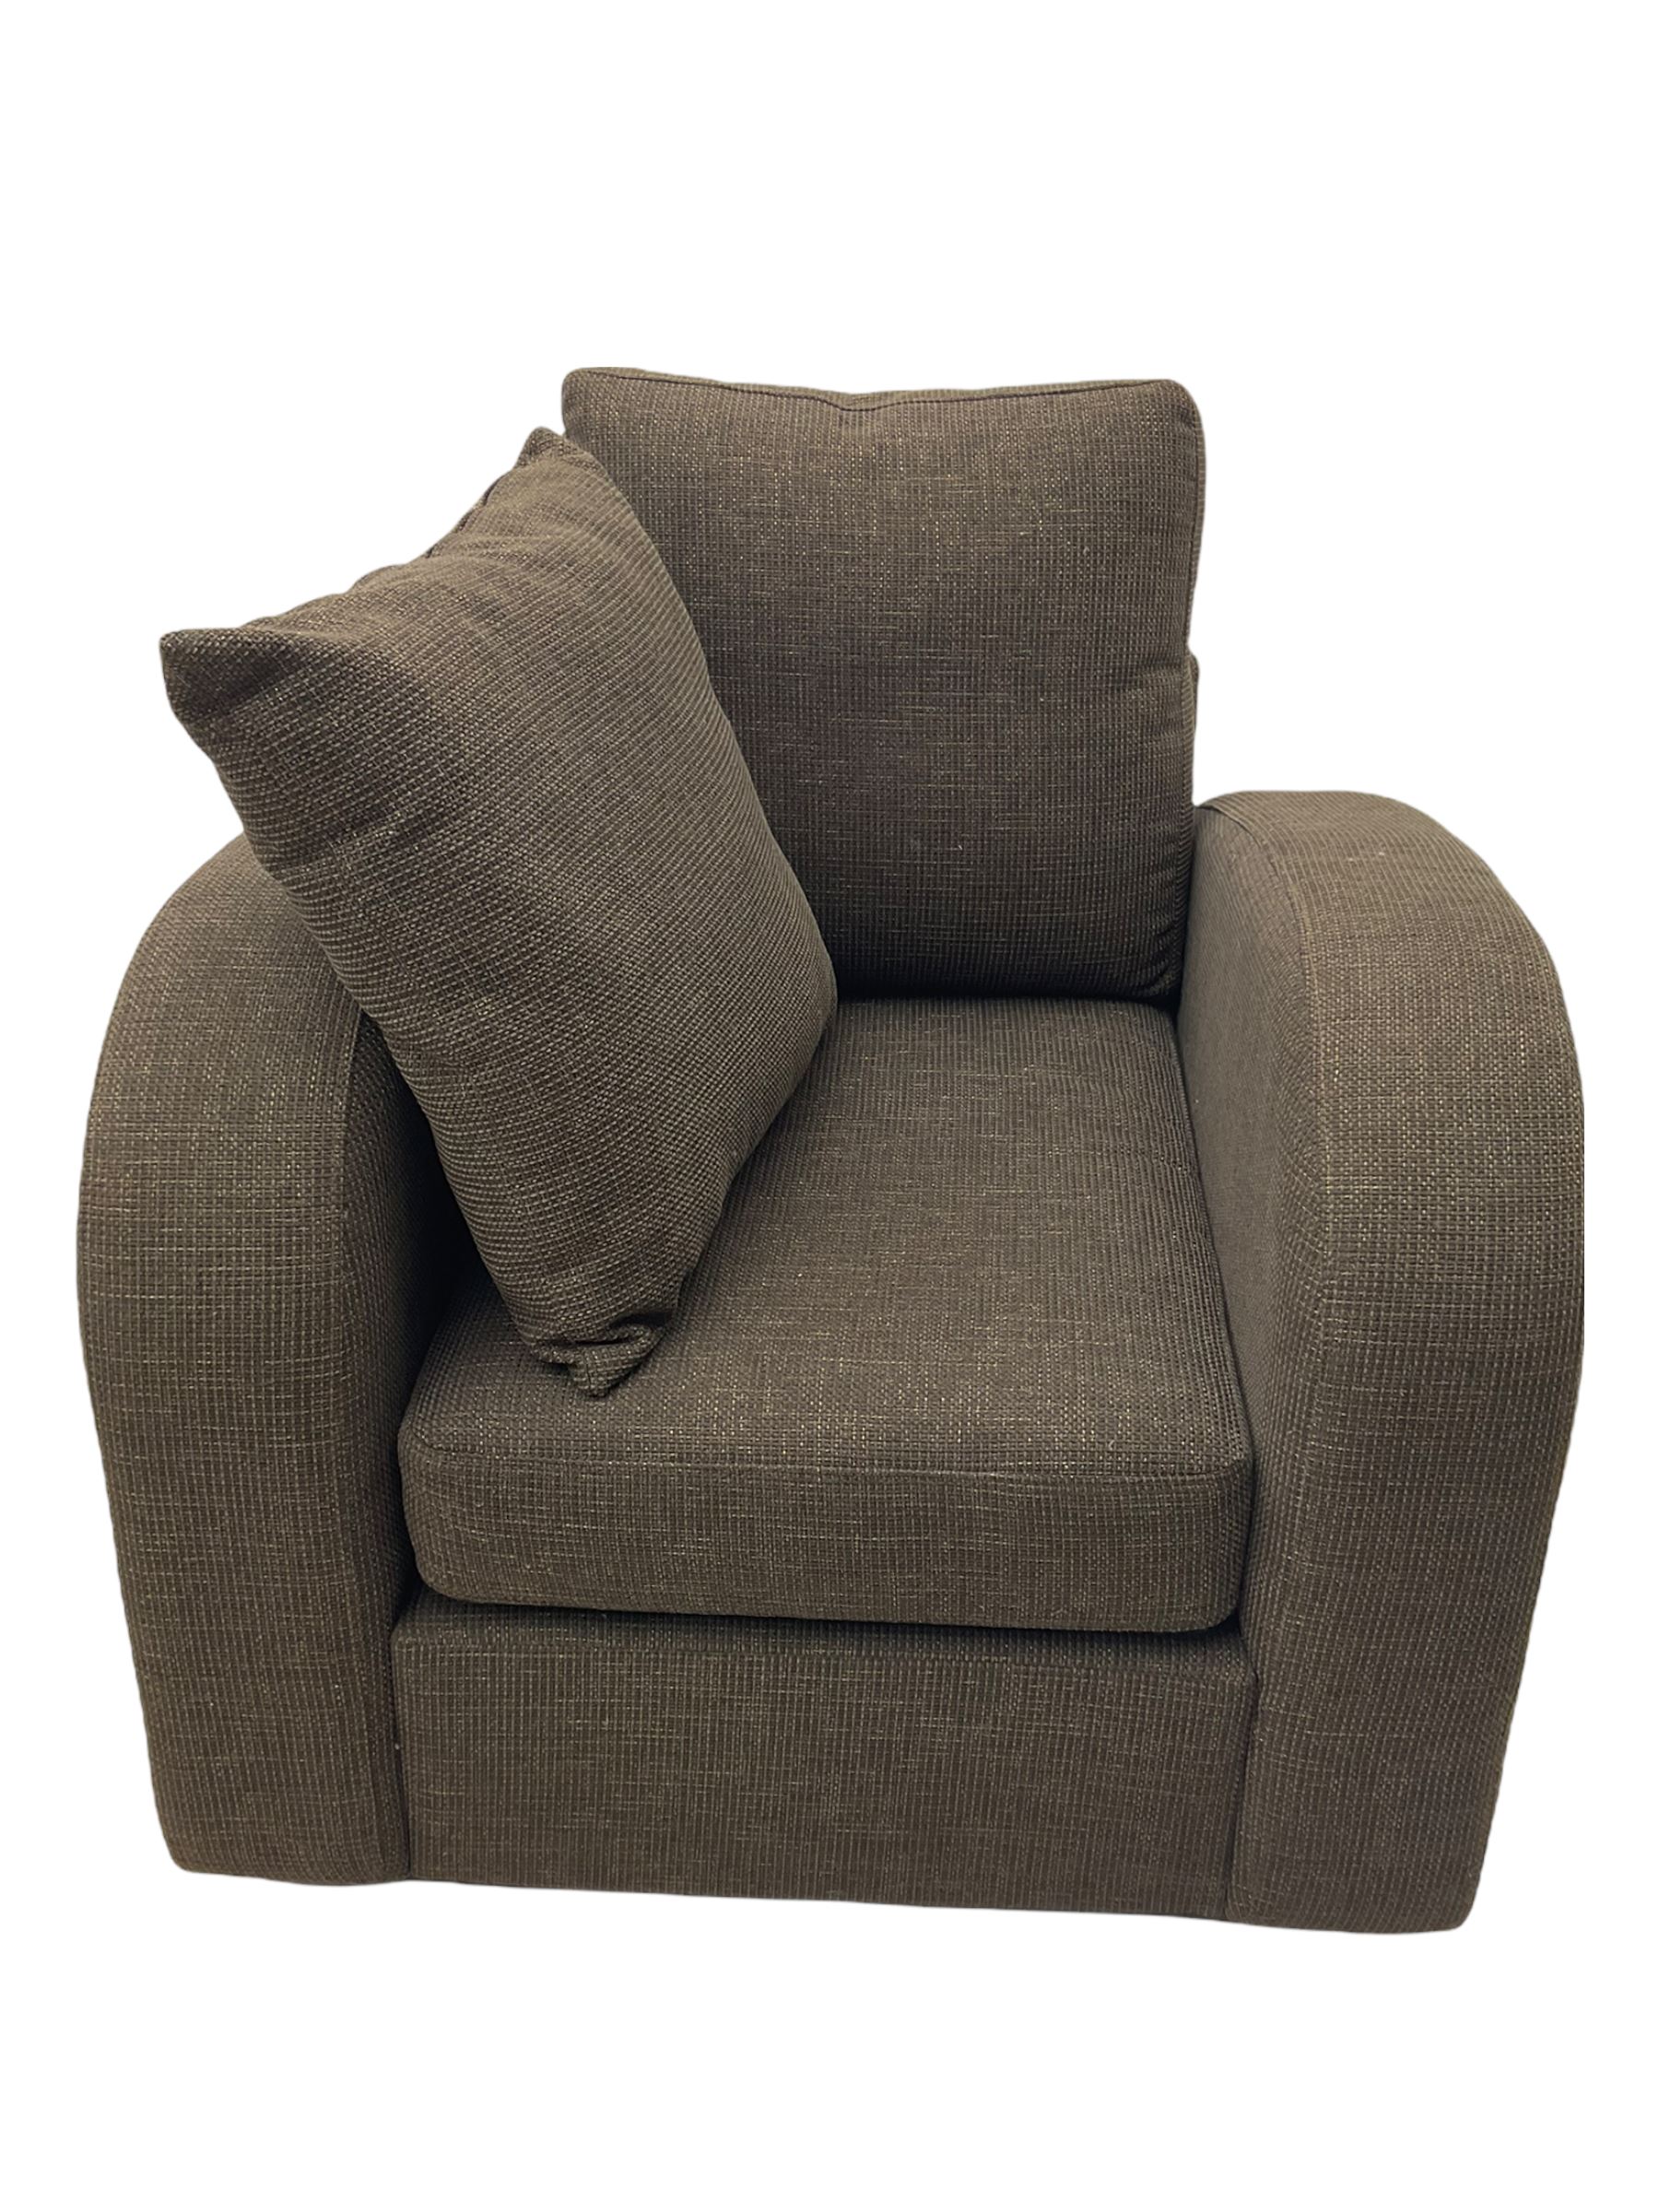 Swivel armchair - Image 8 of 9